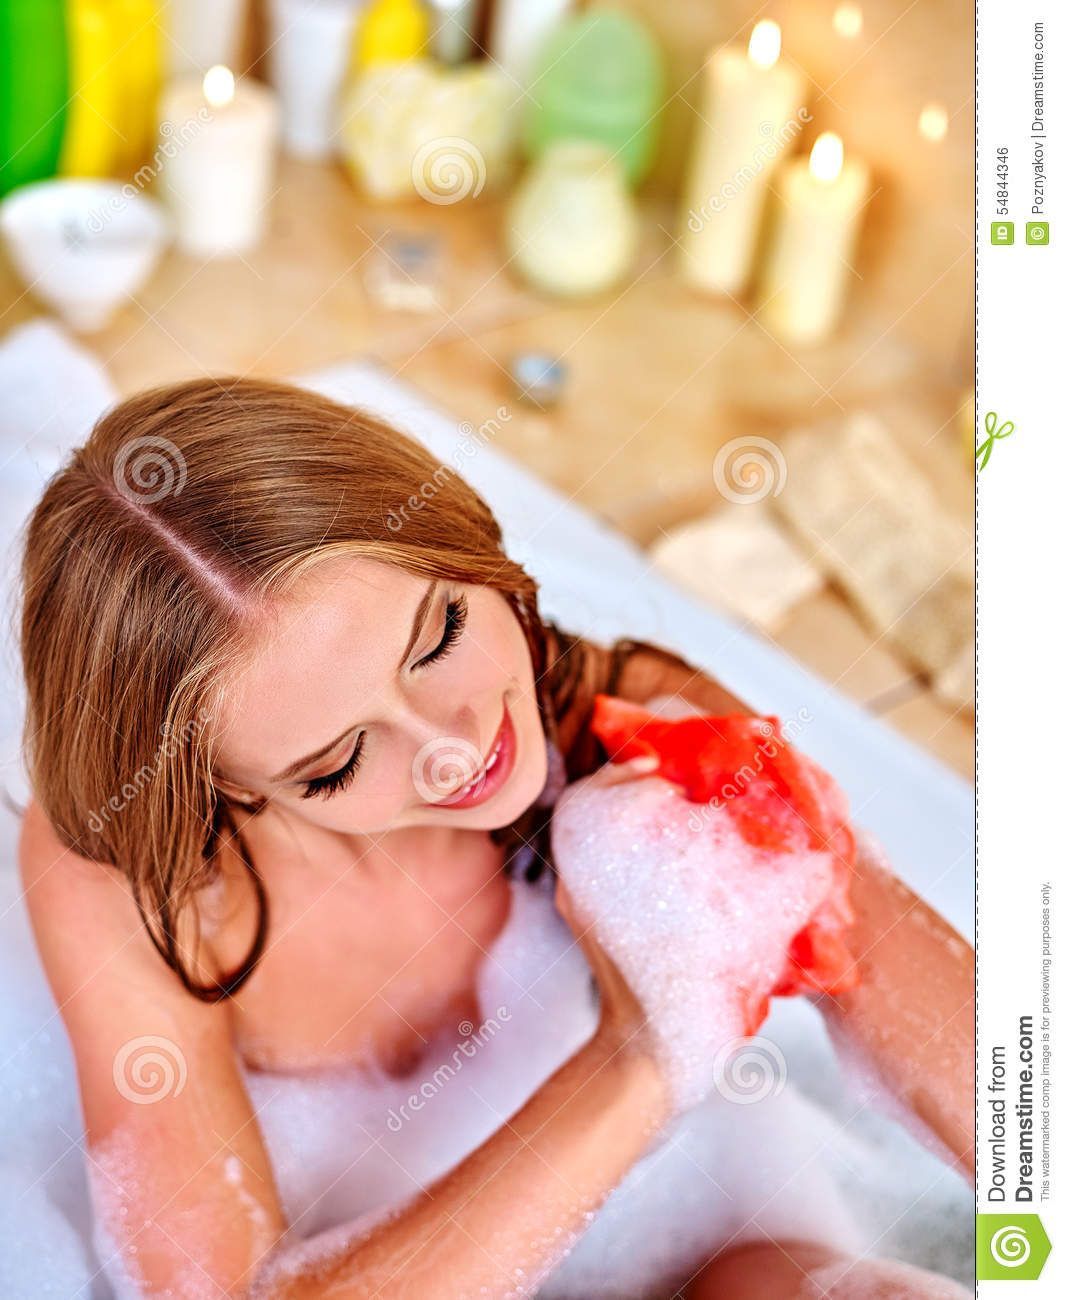 Bath lesbian taking